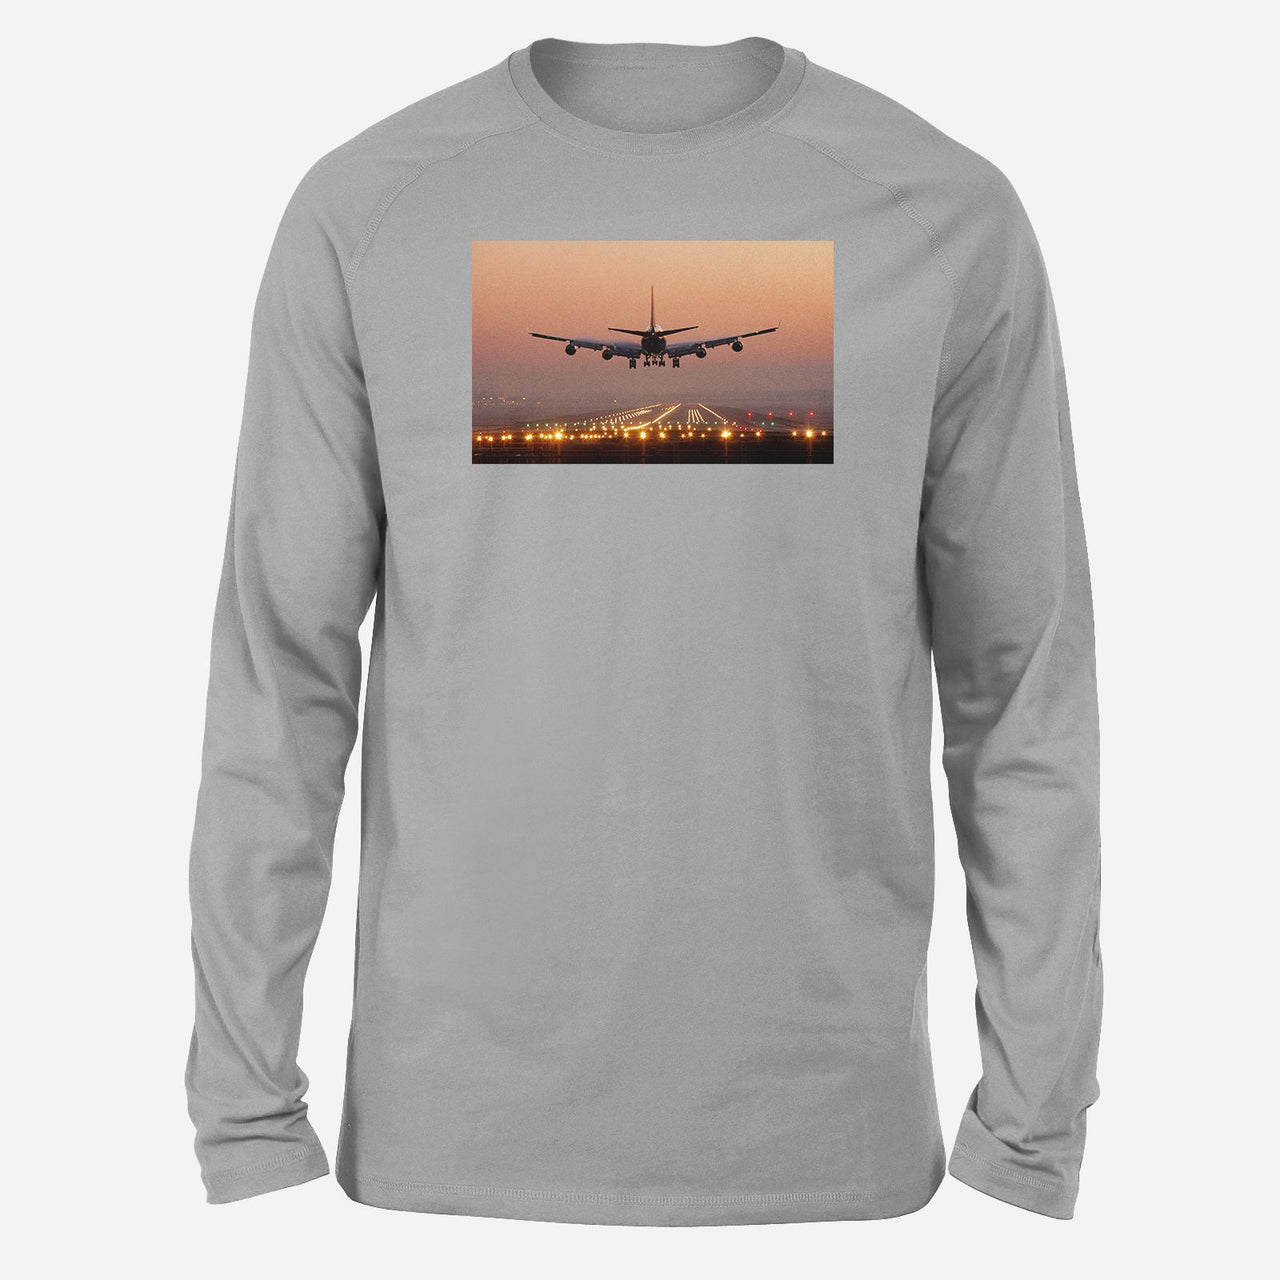 Landing Boeing 747 During Sunset Designed Long-Sleeve T-Shirts